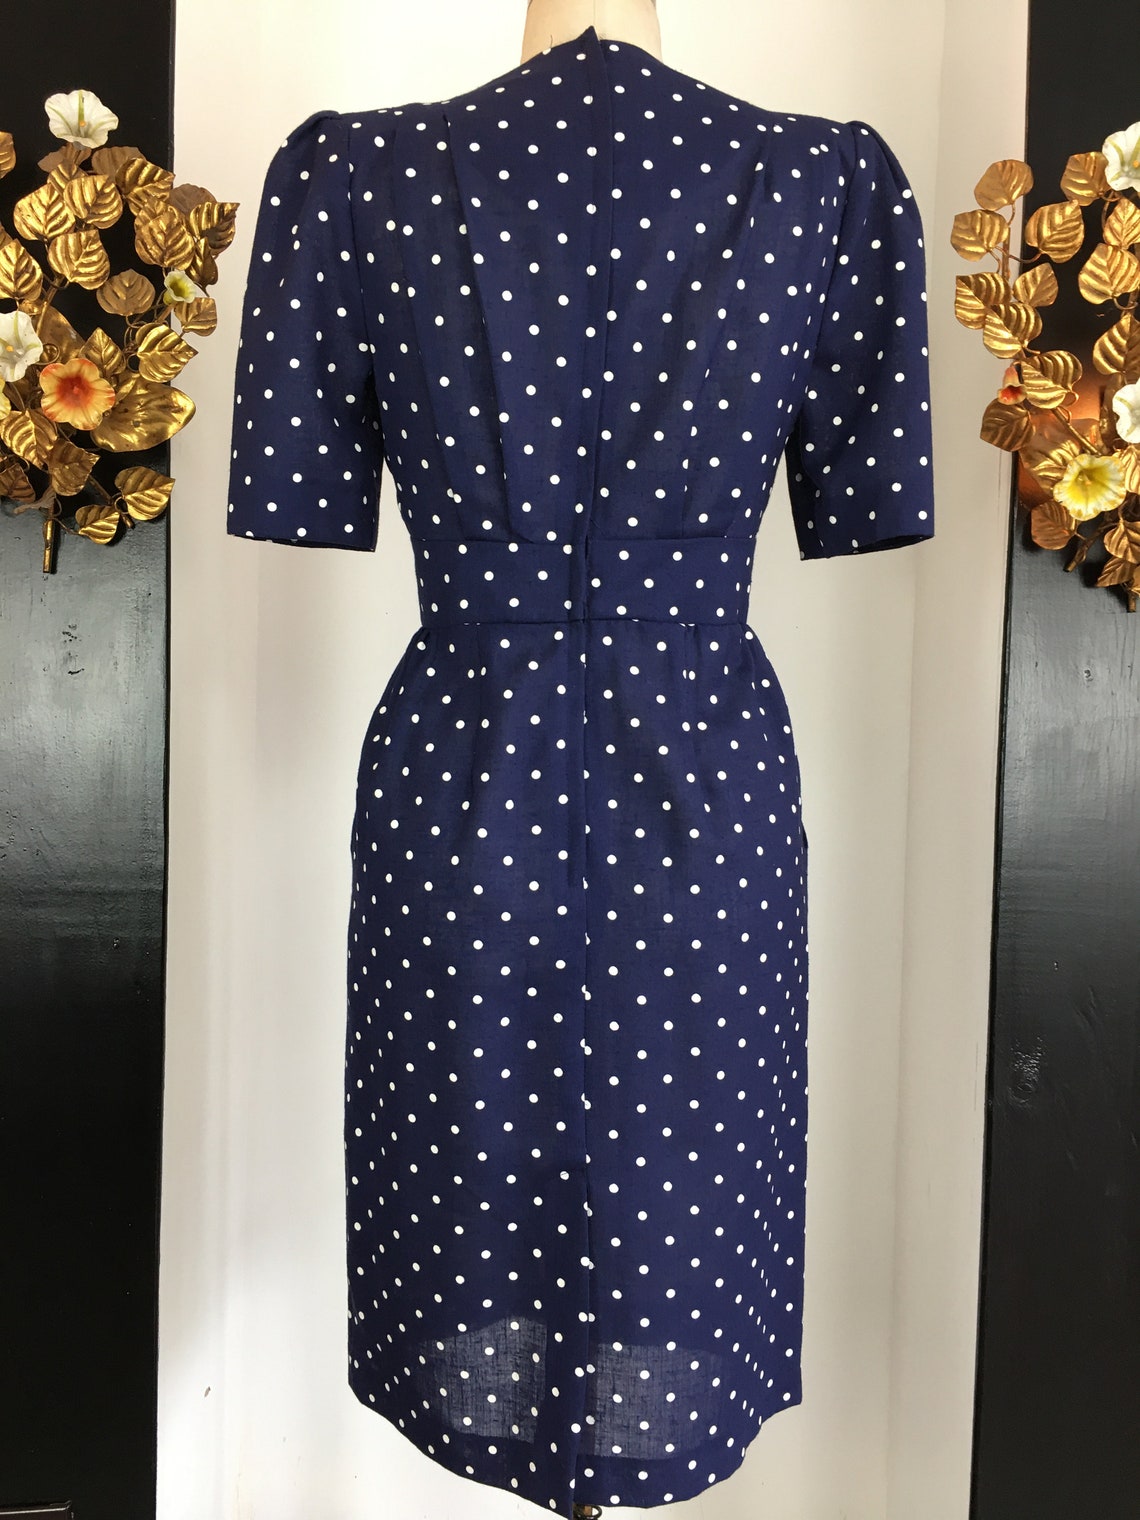 1980s polka dot dress blue and white dots vintage 80s dress | Etsy